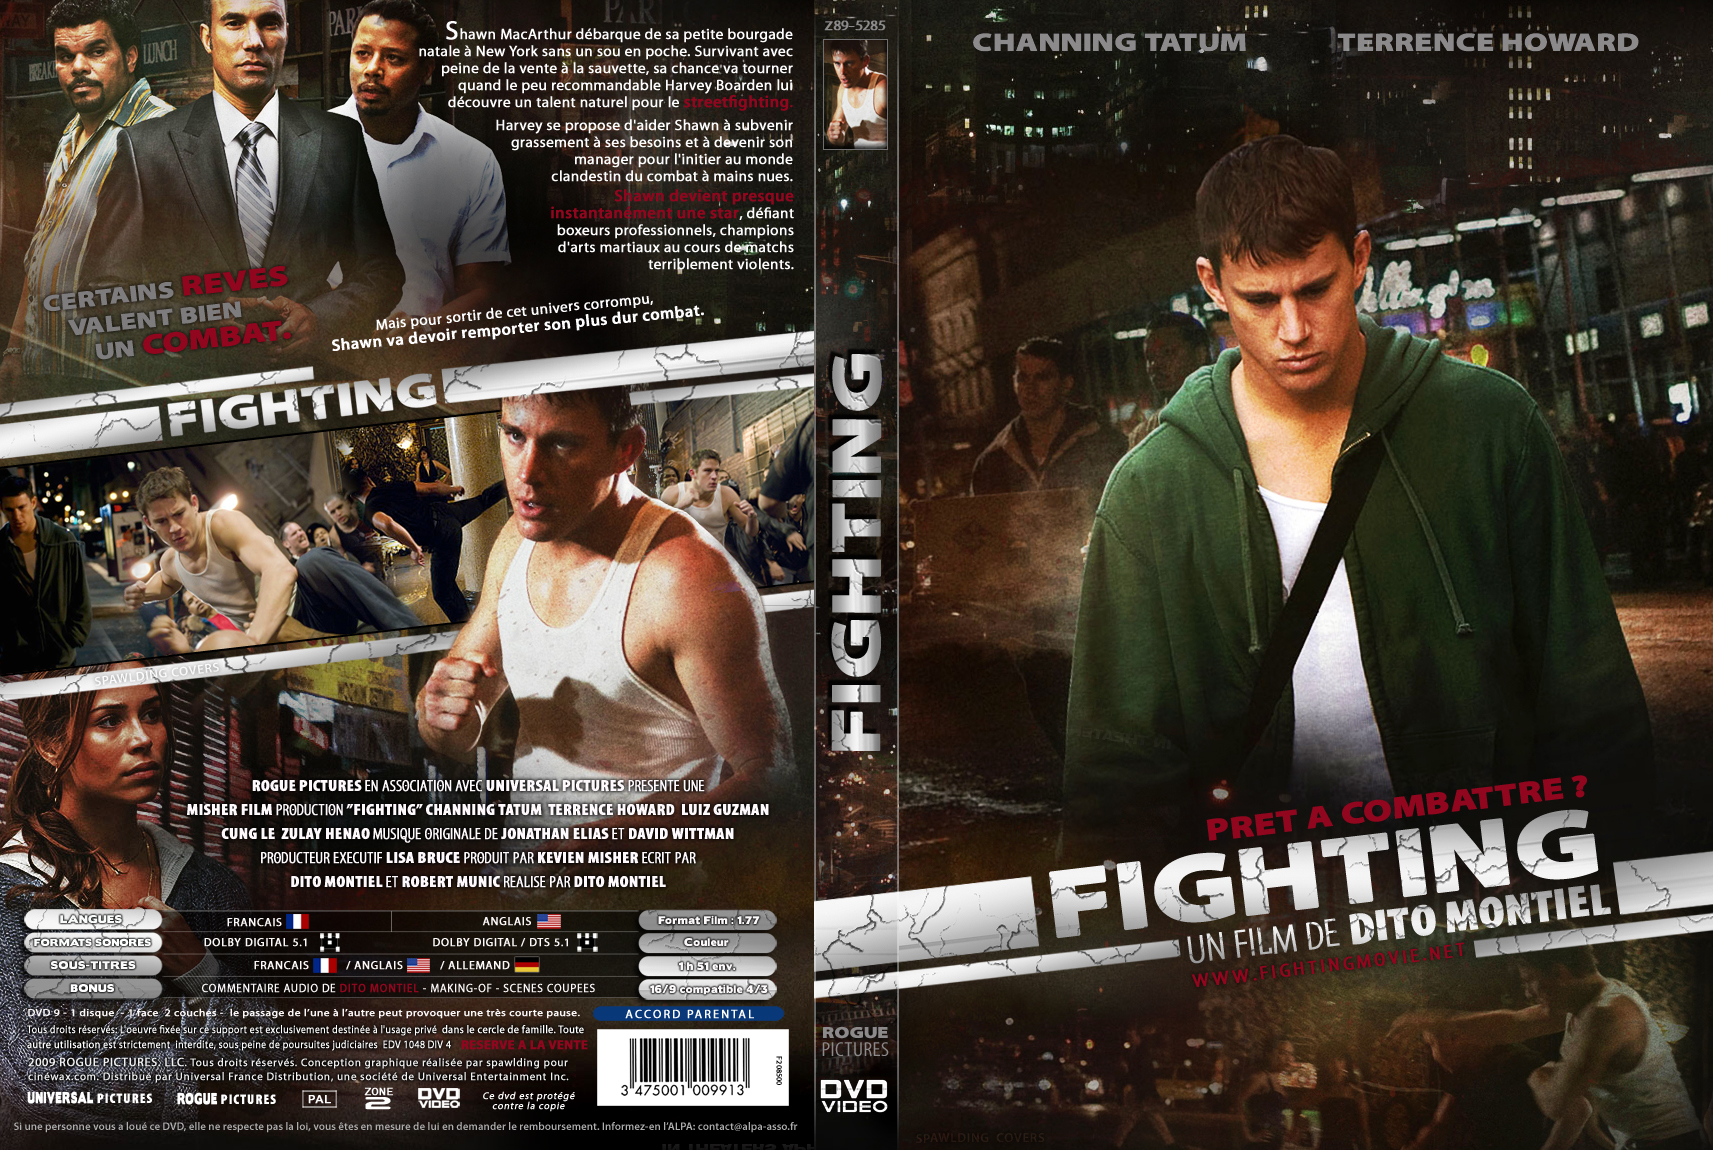 Jaquette DVD Fighting custom